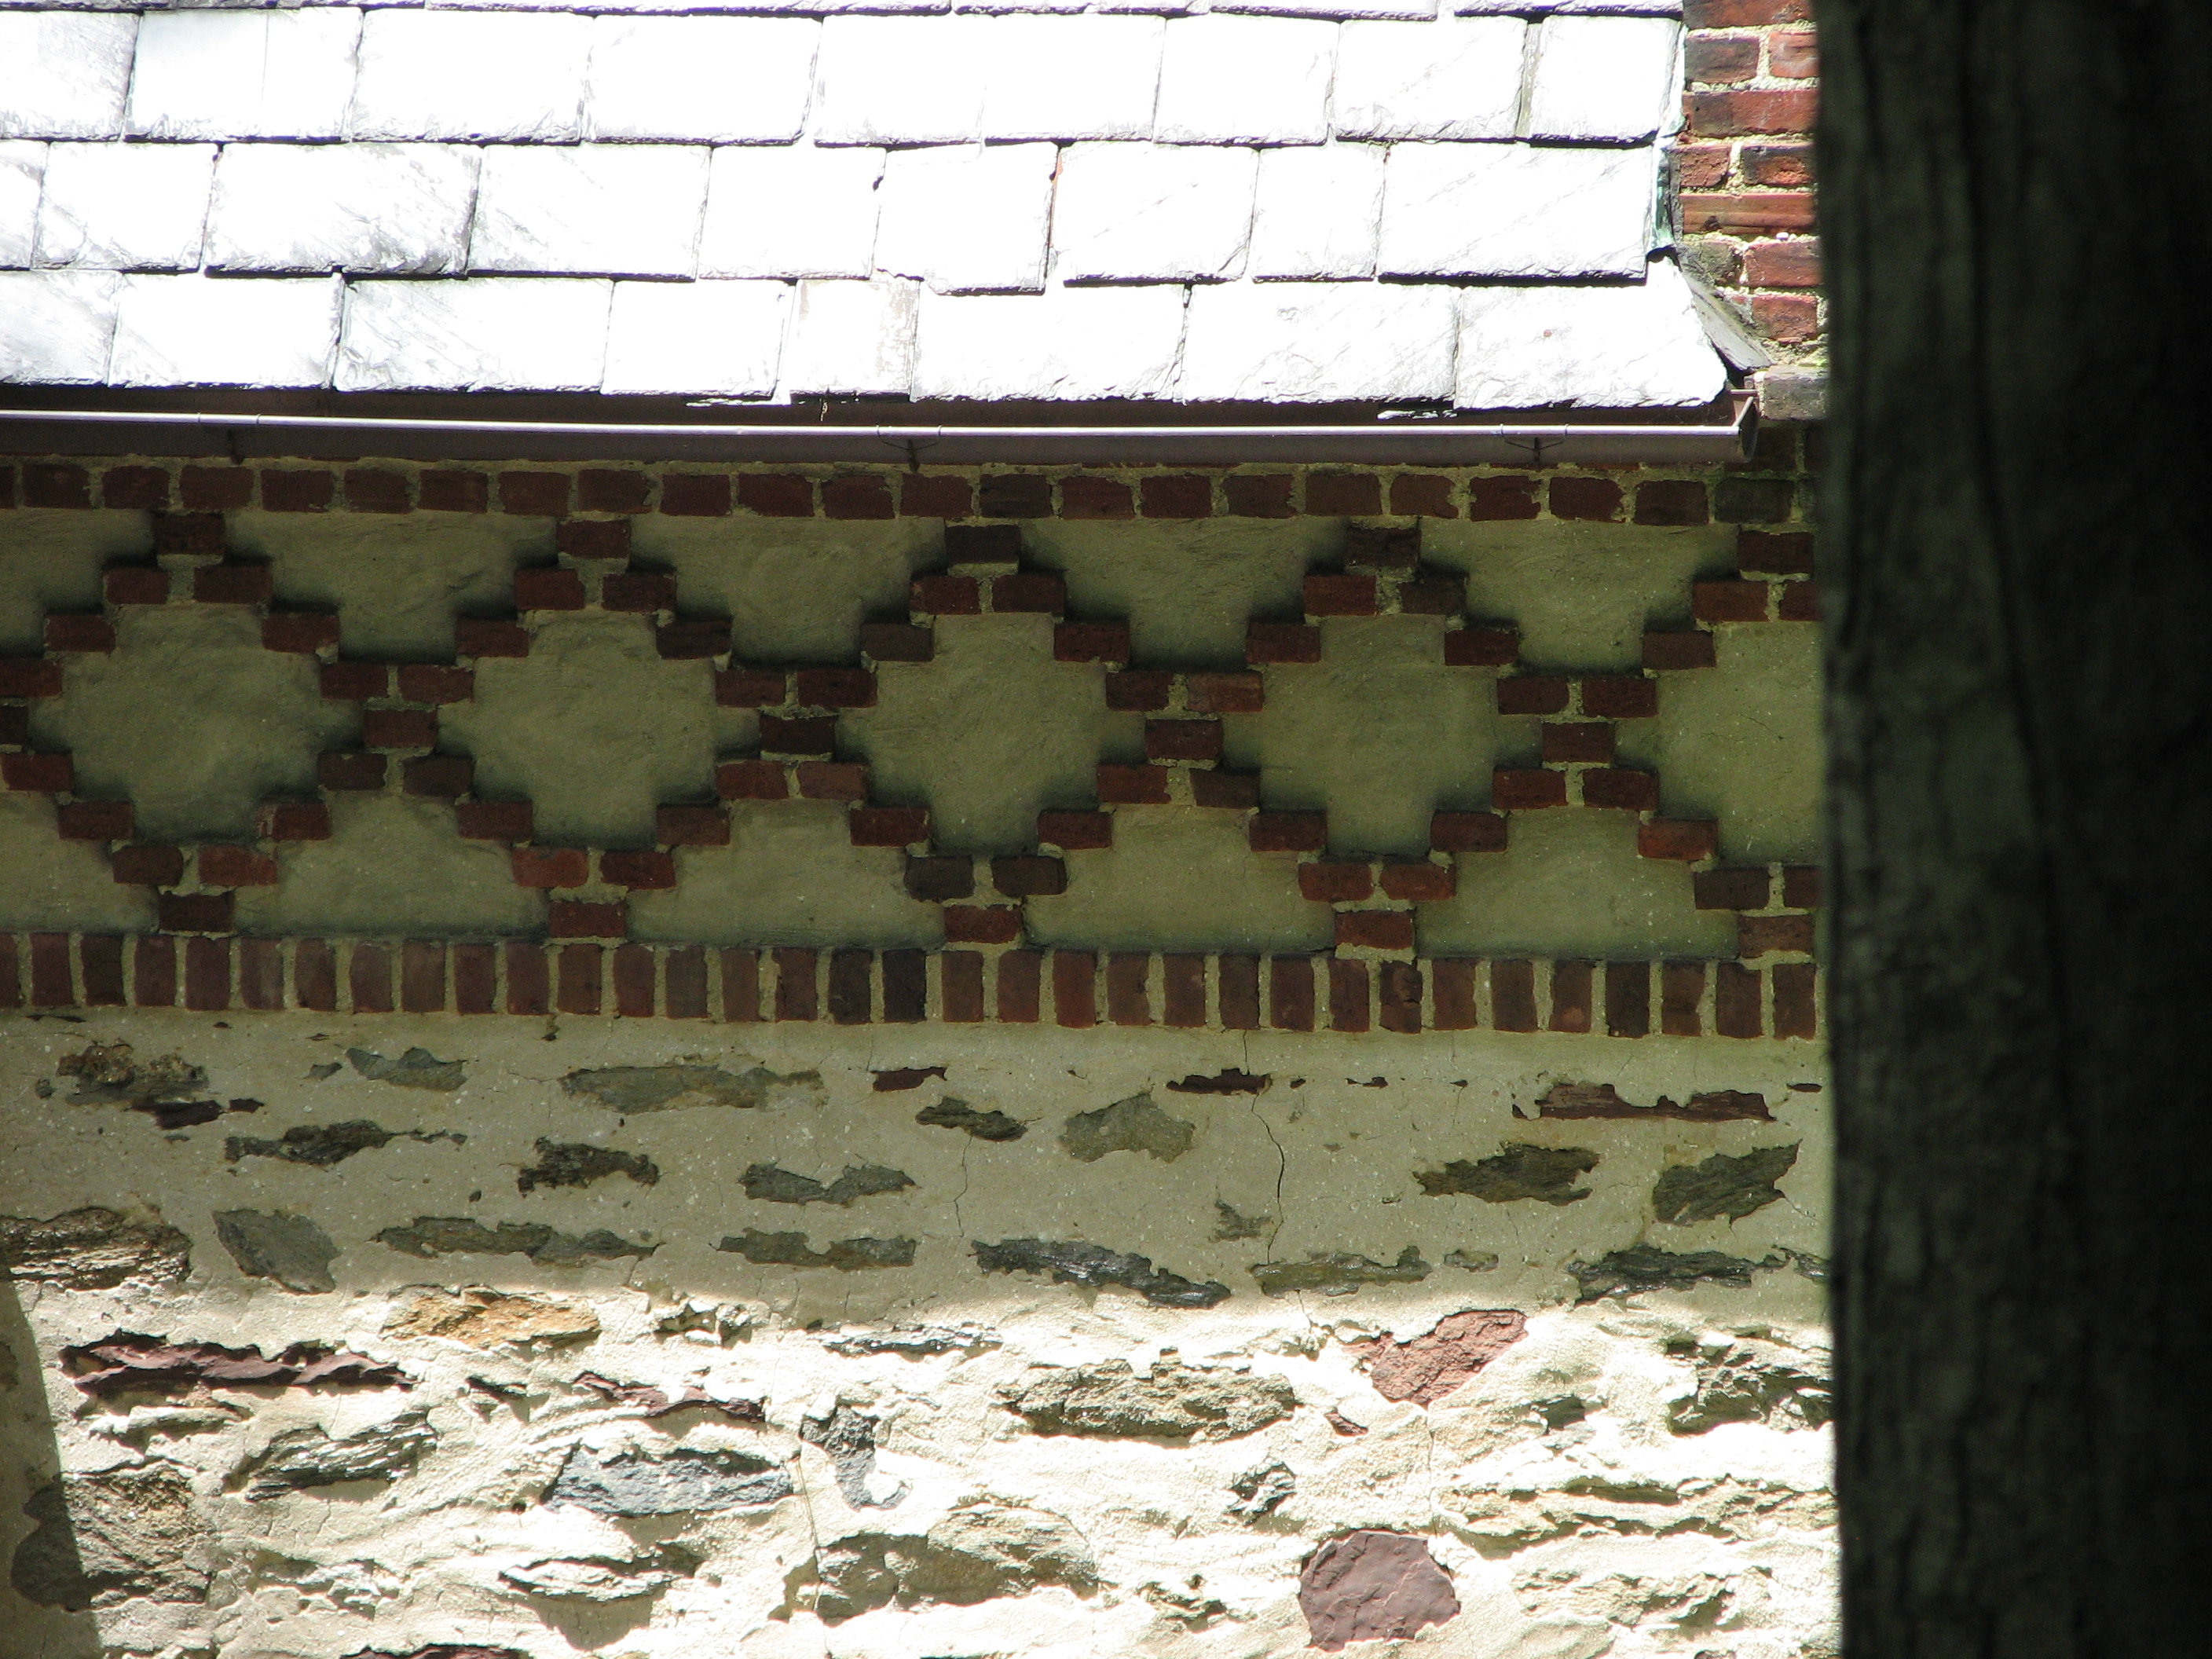 Elaborate brick designs adorn the carriage houses.